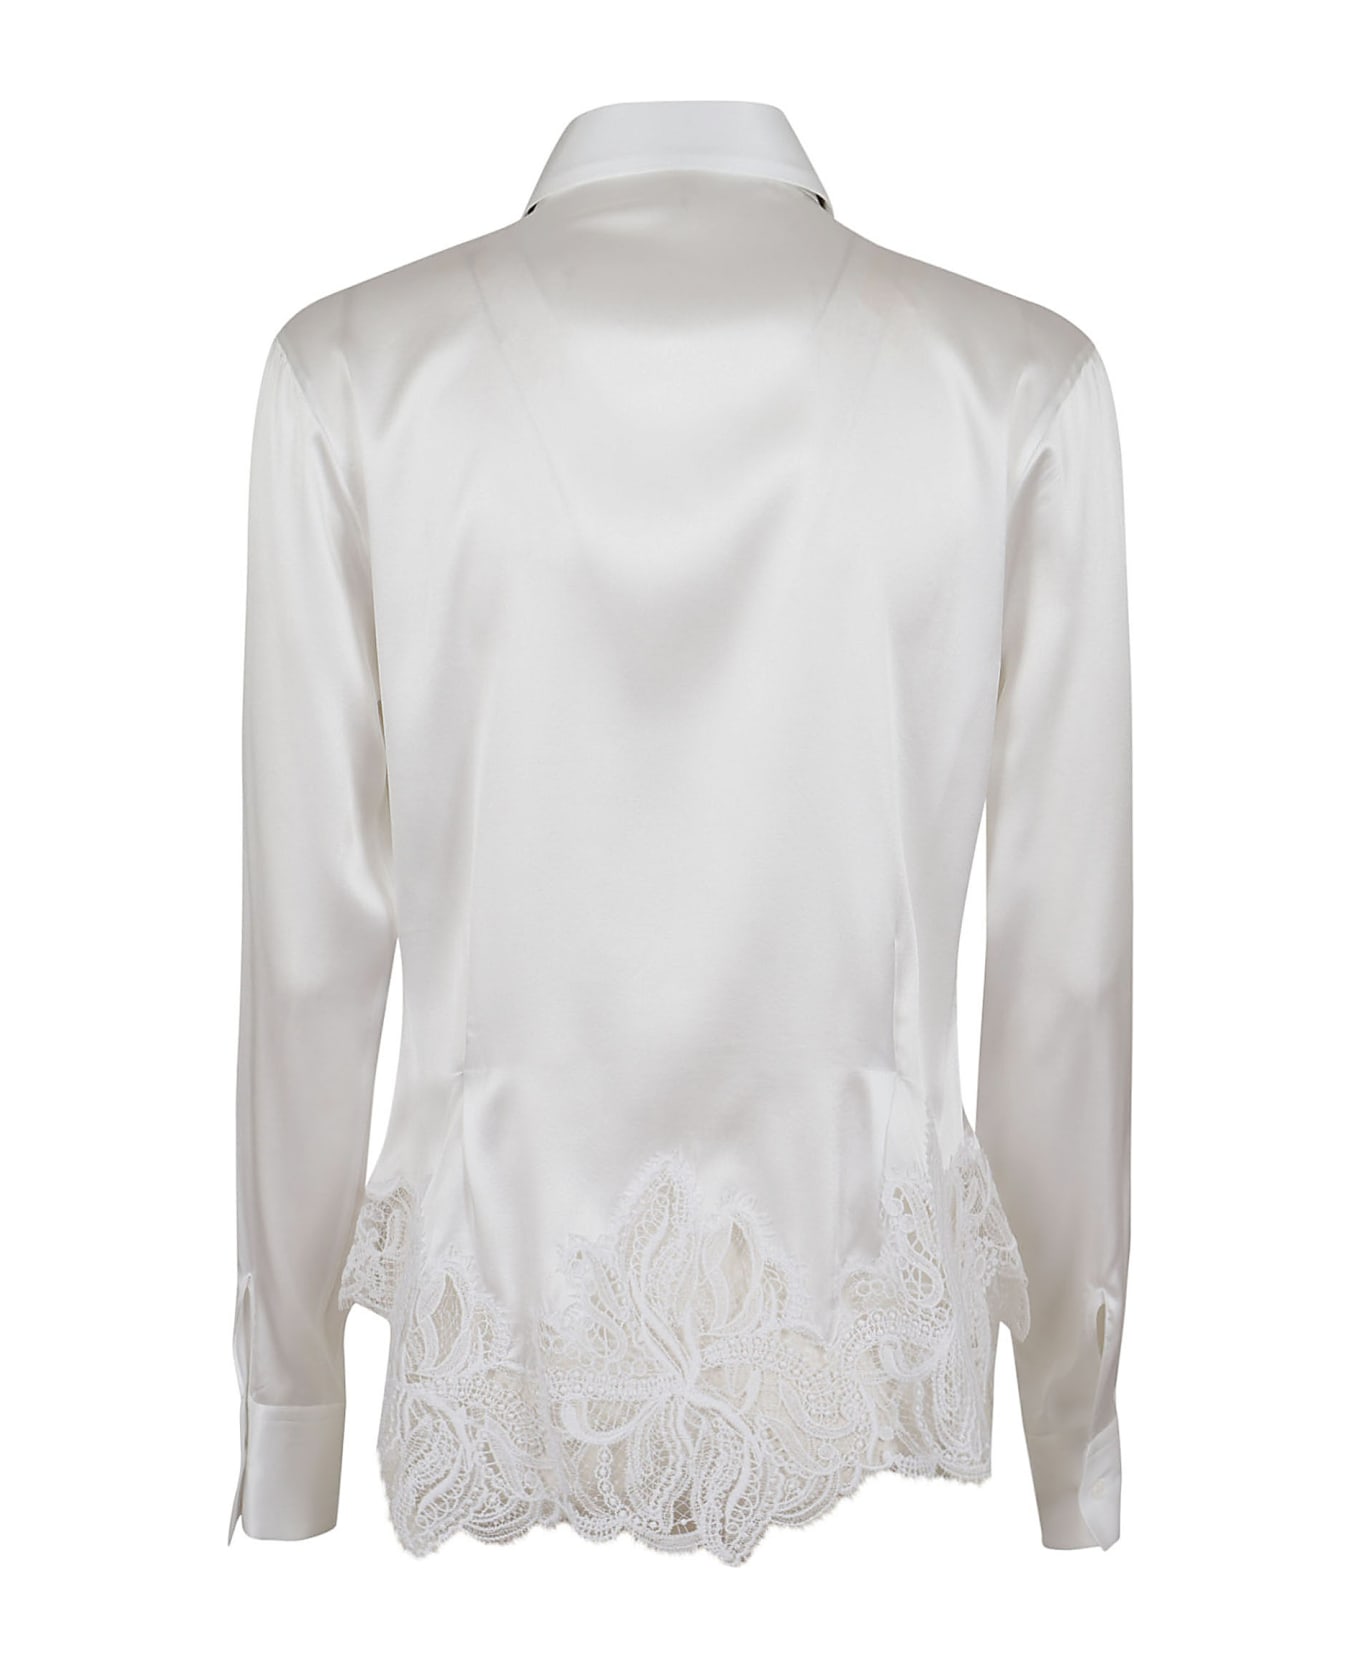 Ermanno Scervino Long Sleeved Shirt - White